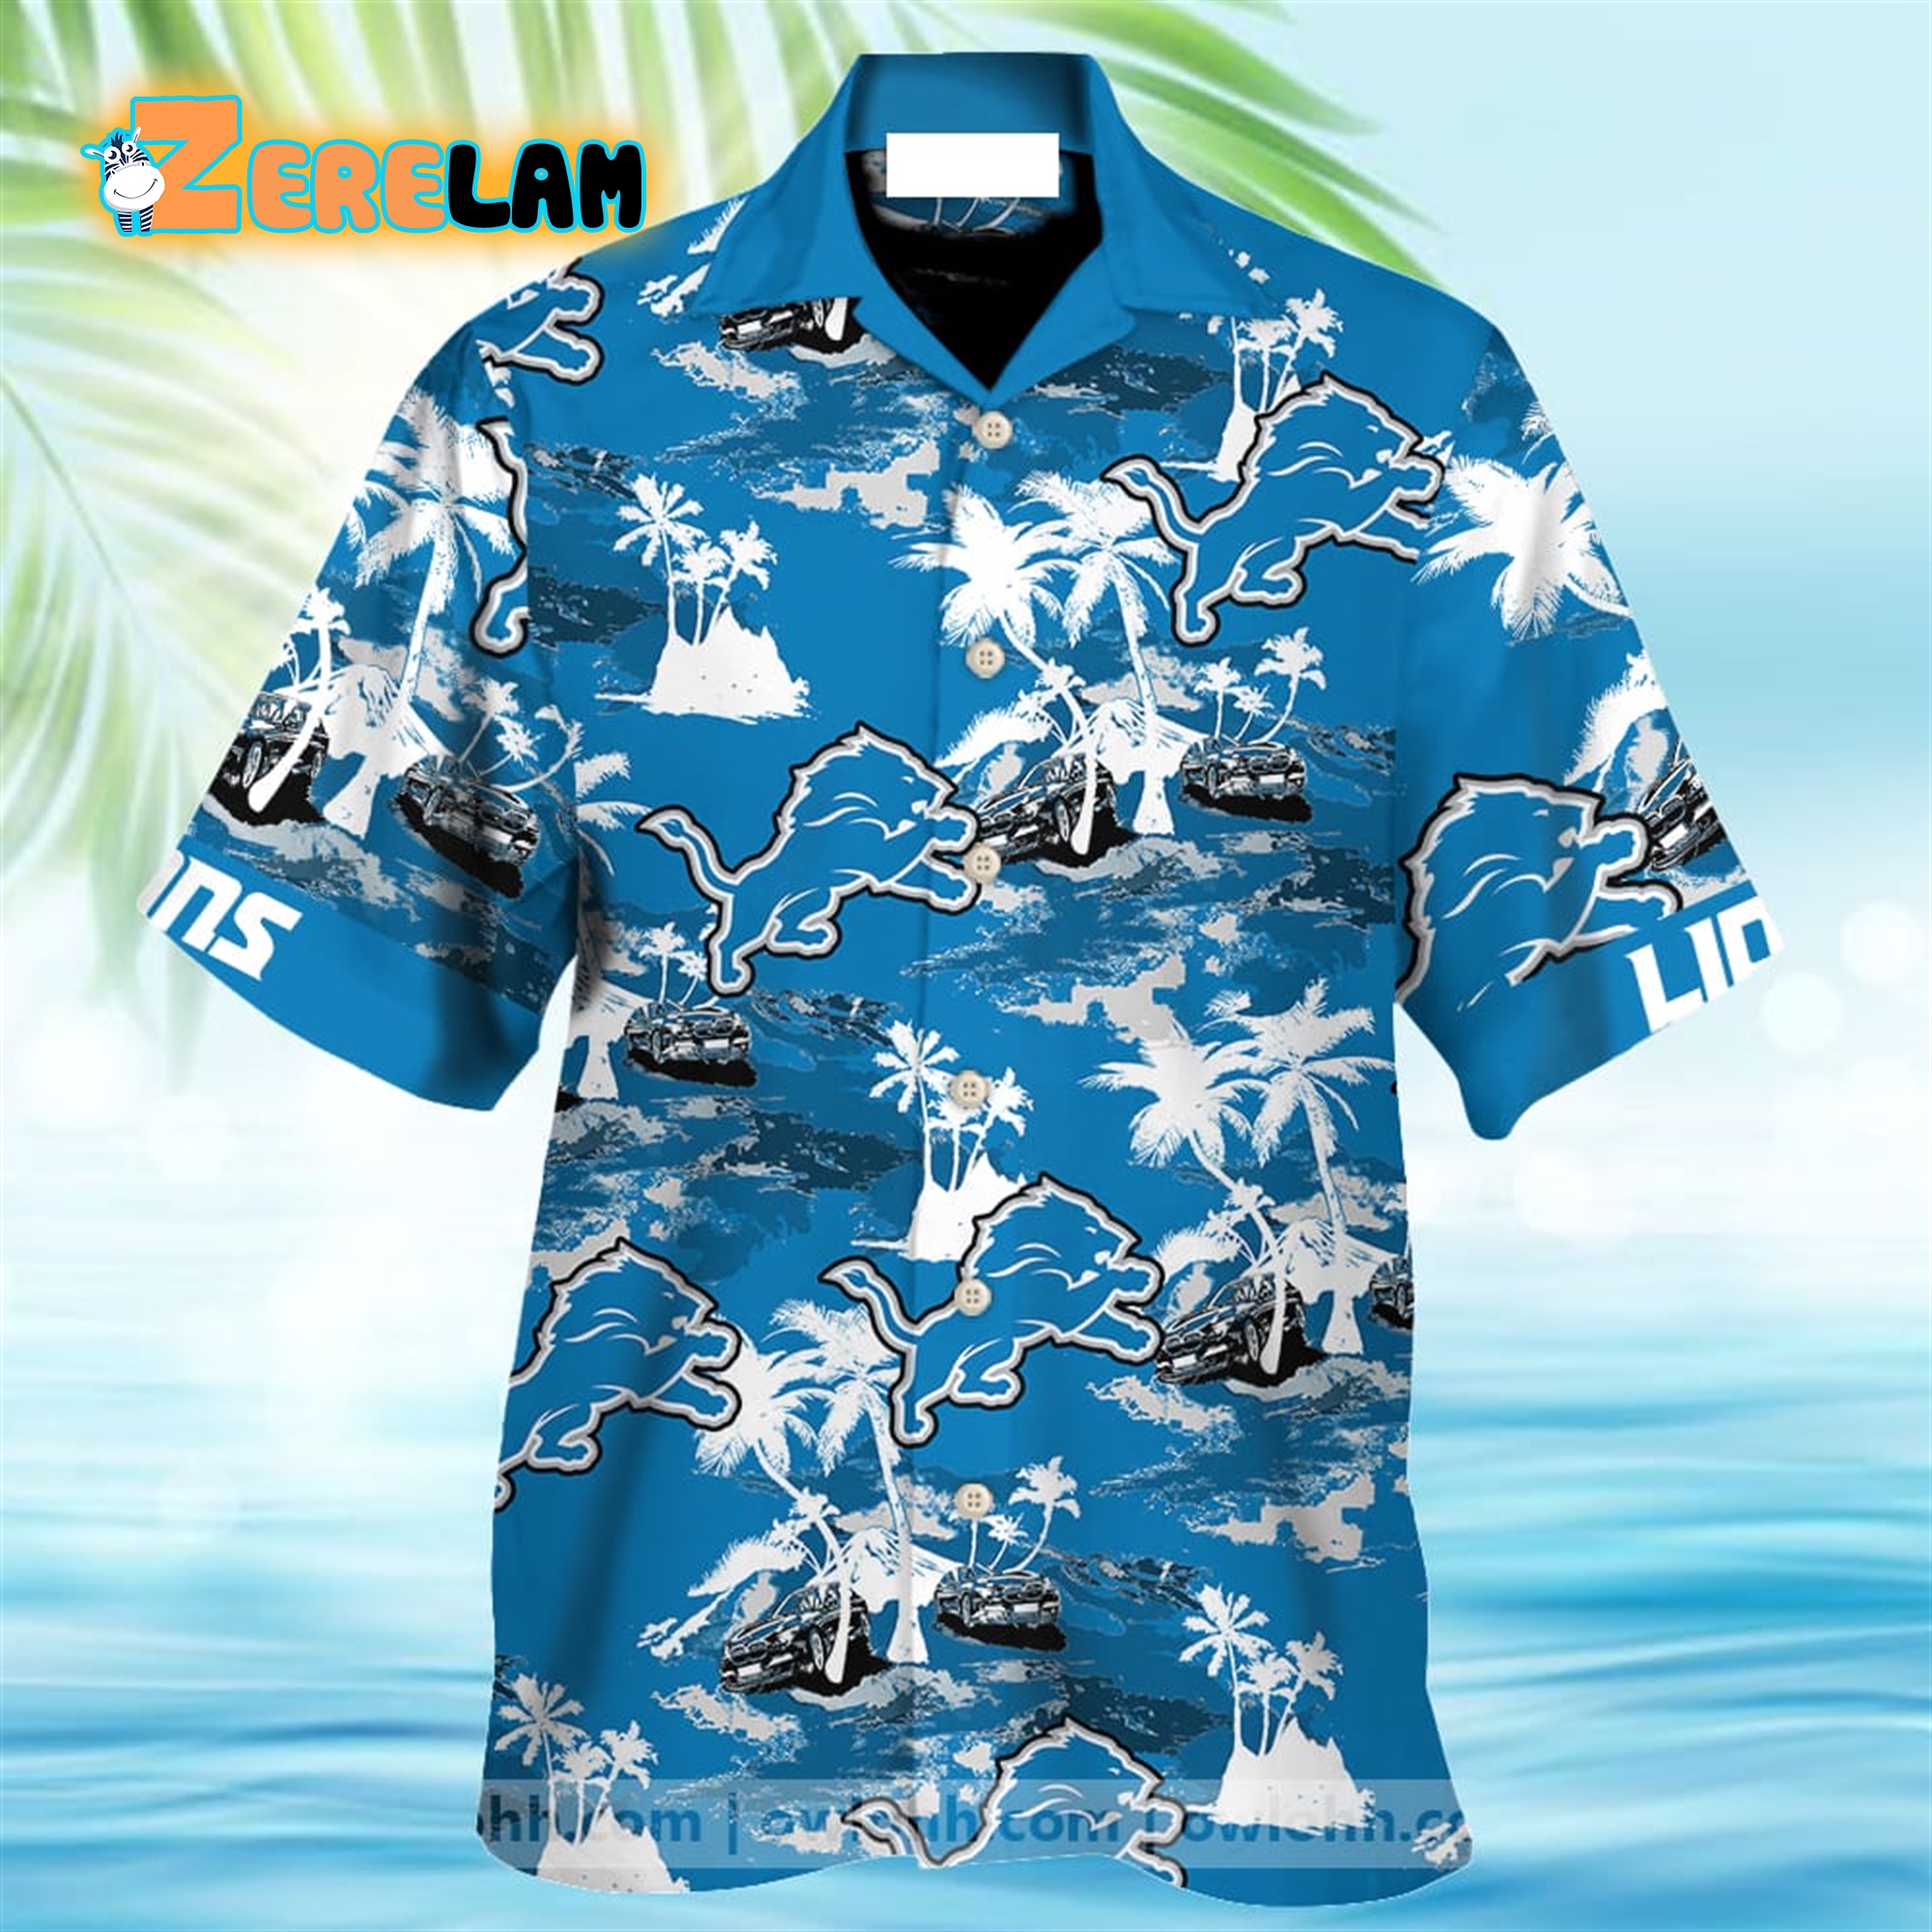 Lions Tommy Bahama Hawaiian Shirt - Zerelam